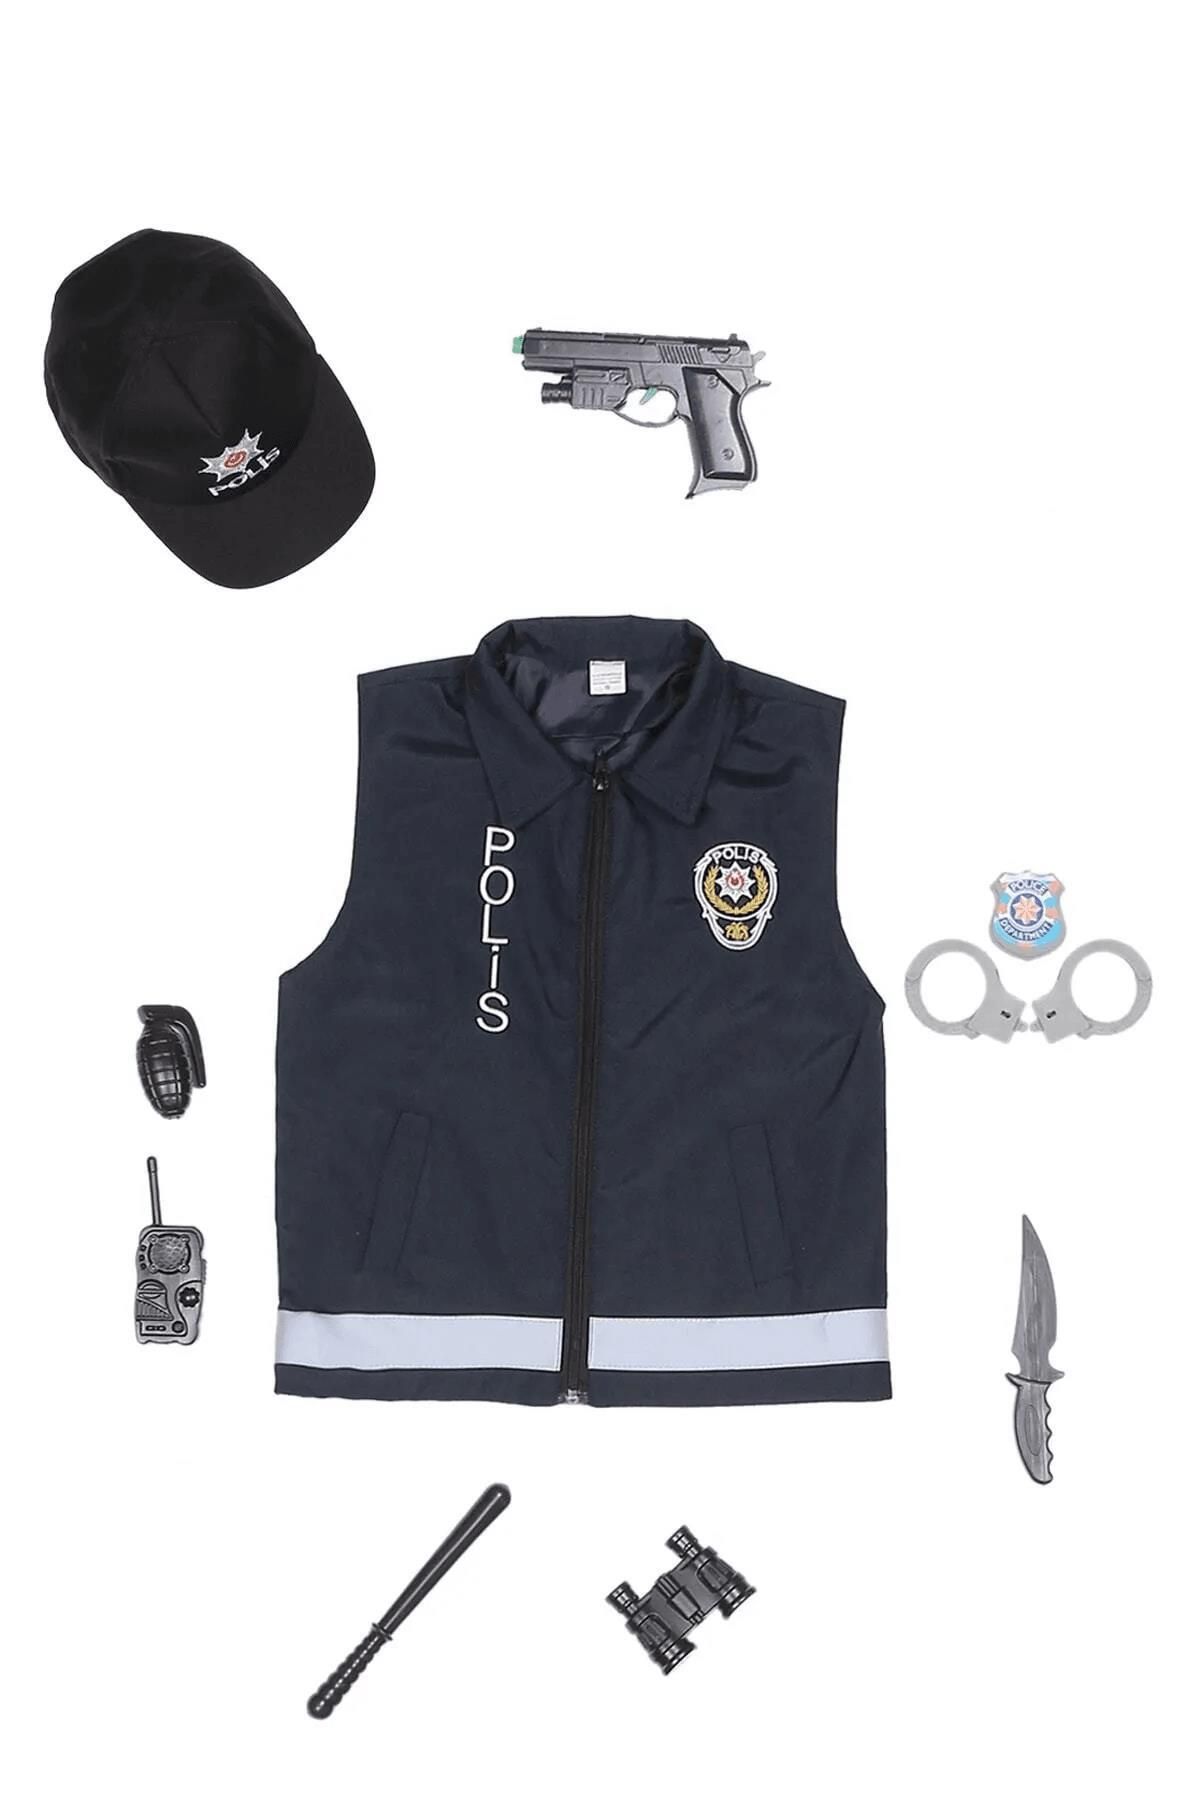 Mashotrend Polis Yeleği + Şapka + Oyuncak seti - Çocuk Polis Kostümü - Çocuk Polis Kıyafeti Çocuk Kostüm